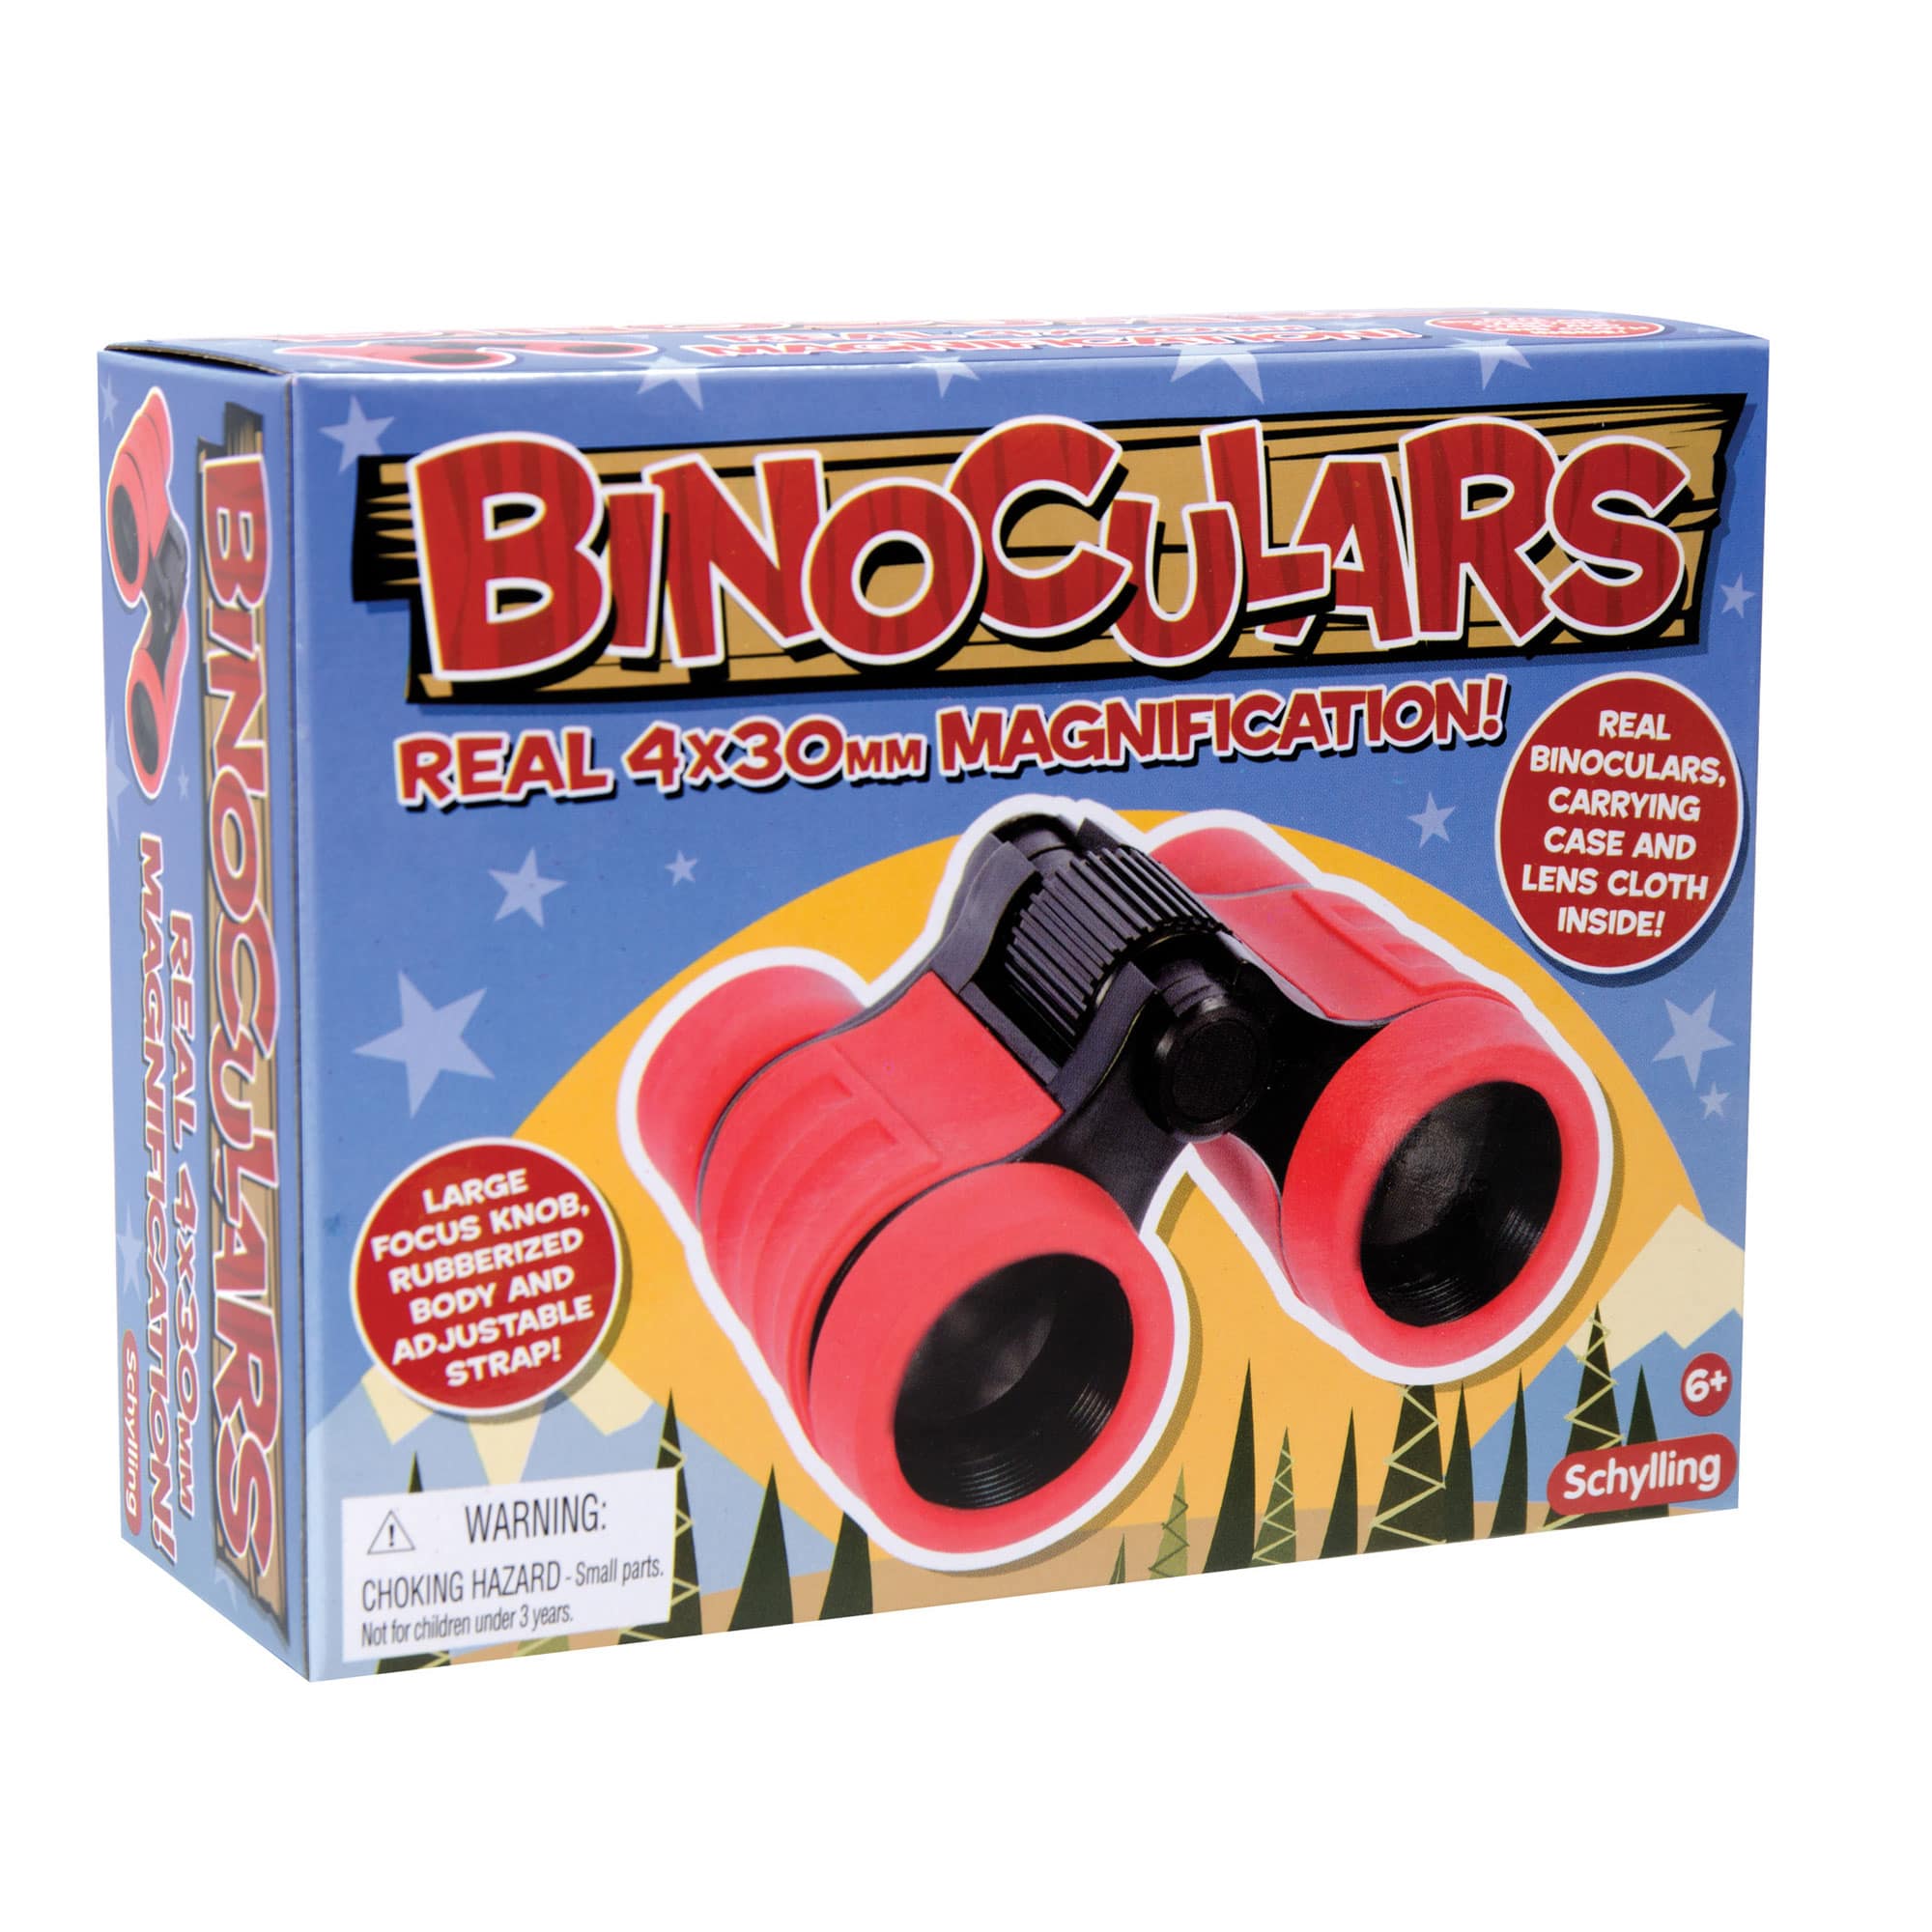 Binoculars - 4x30 Magnification    